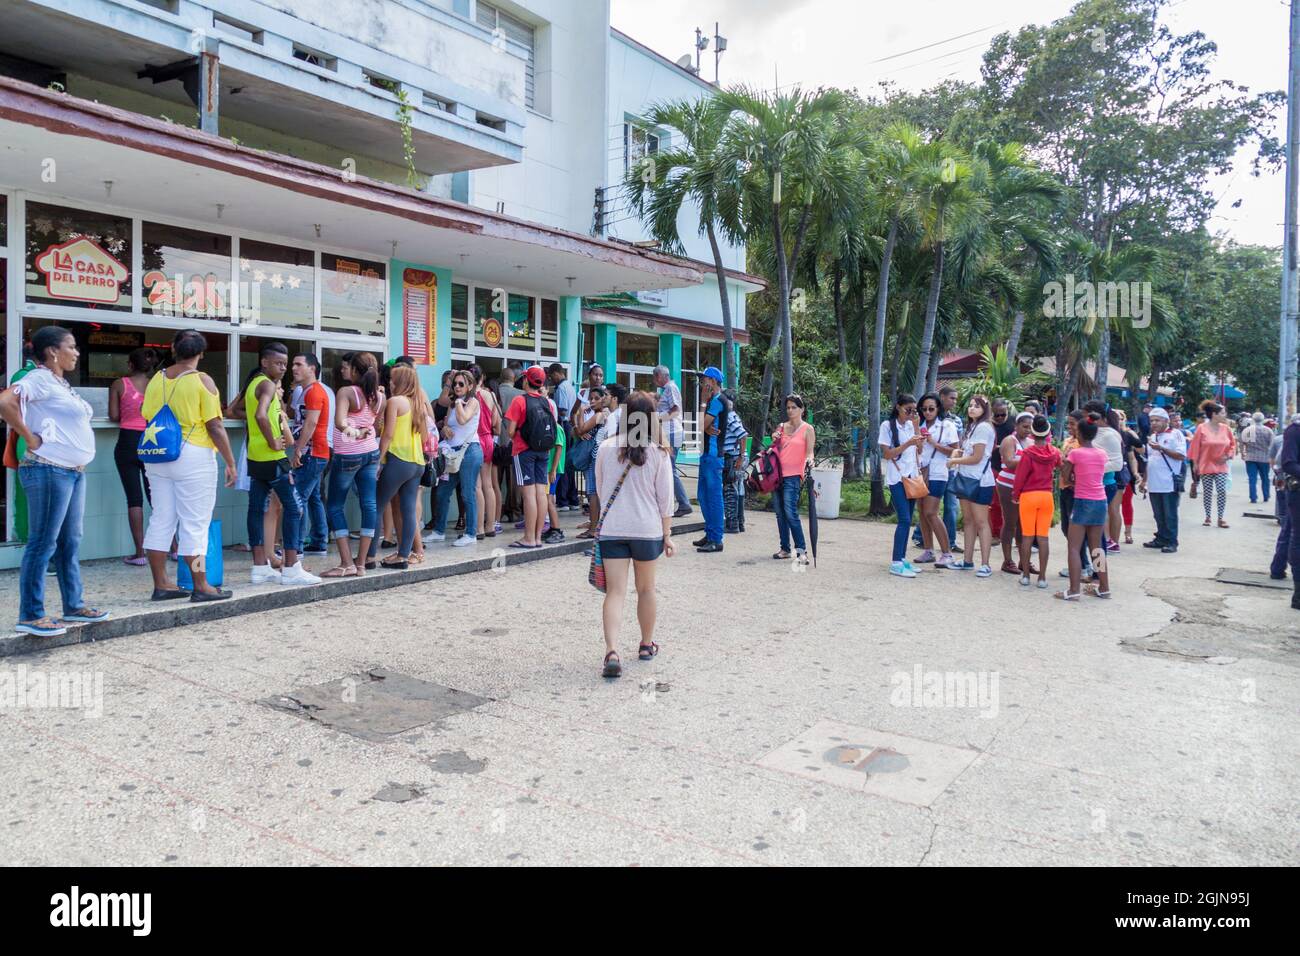 HAVANA, CUBA - 21 FEBBRAIO 2016: Lunga coda di persone in attesa di un hot dog. Foto Stock